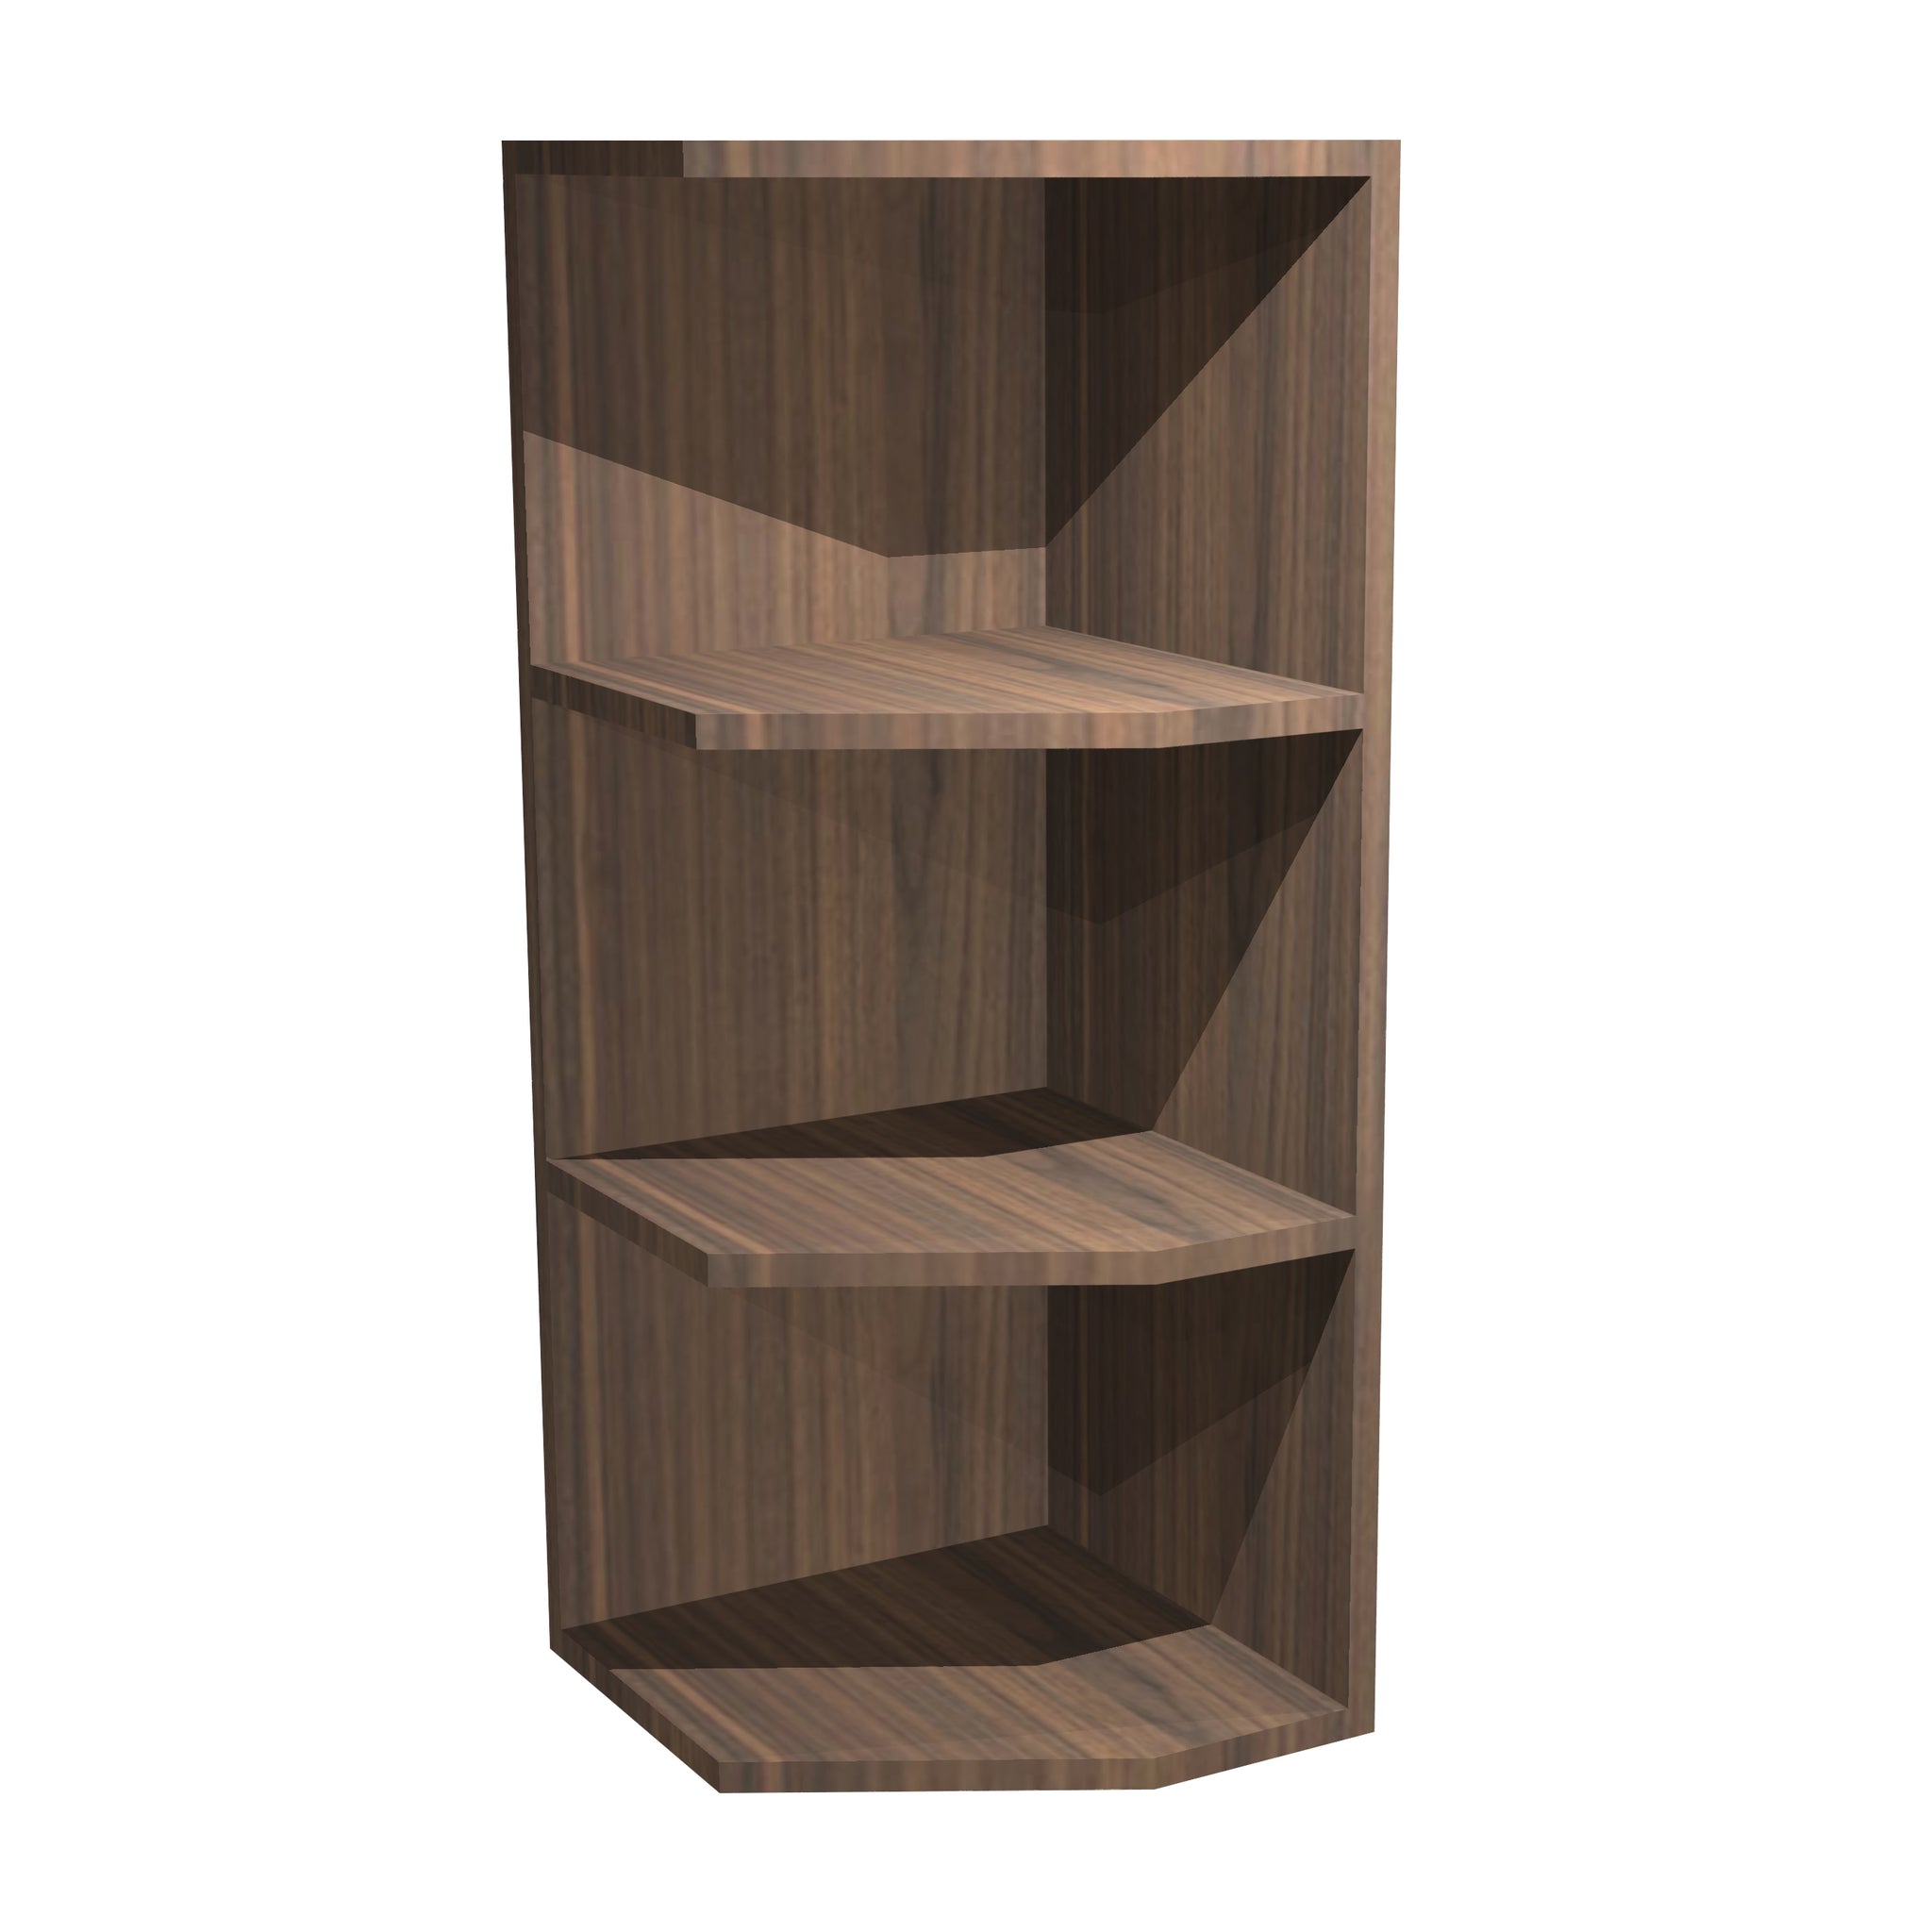 RTA - Walnut - End Wall Shelf Base Cabinets | 12"W x 36"H x 12"D